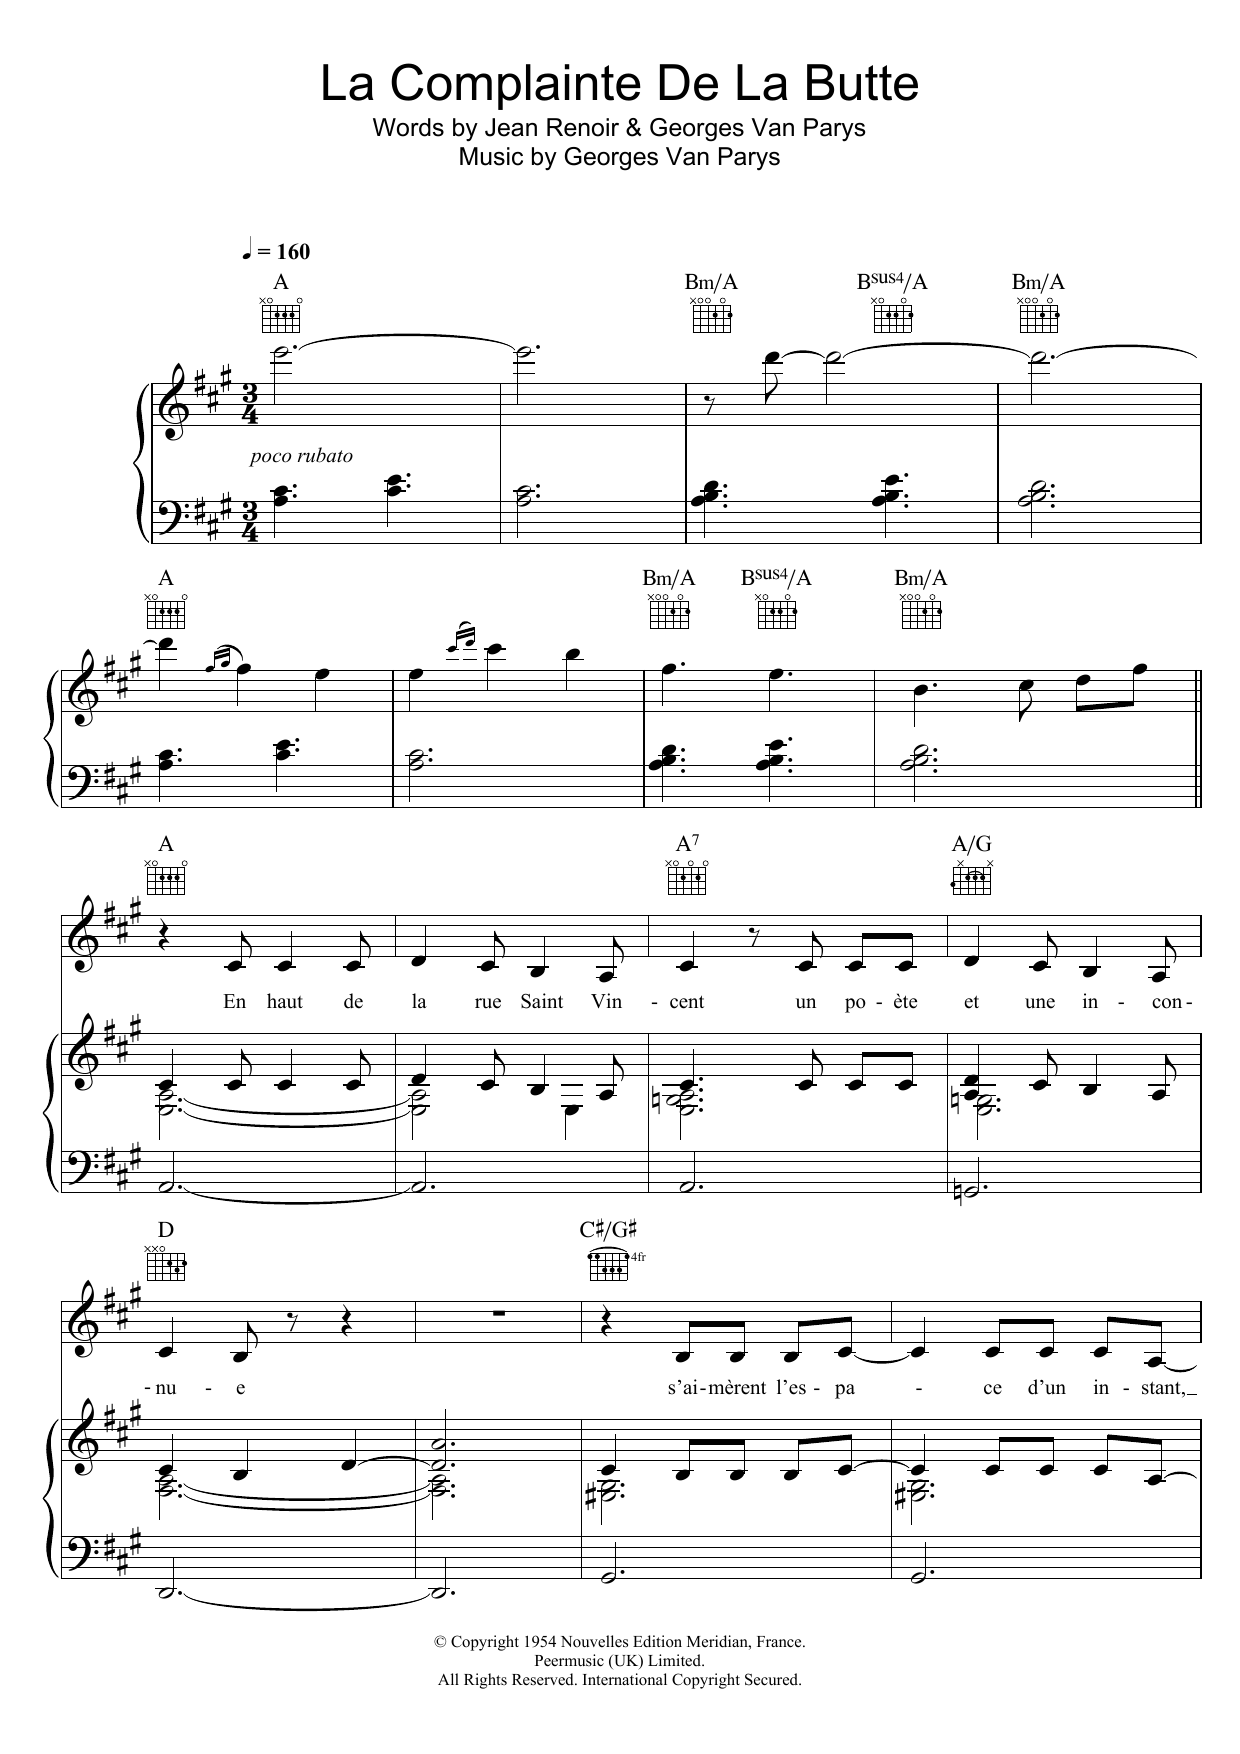 Zaz La Complainte De La Butte Sheet Music Notes & Chords for Piano, Vocal & Guitar (Right-Hand Melody) - Download or Print PDF